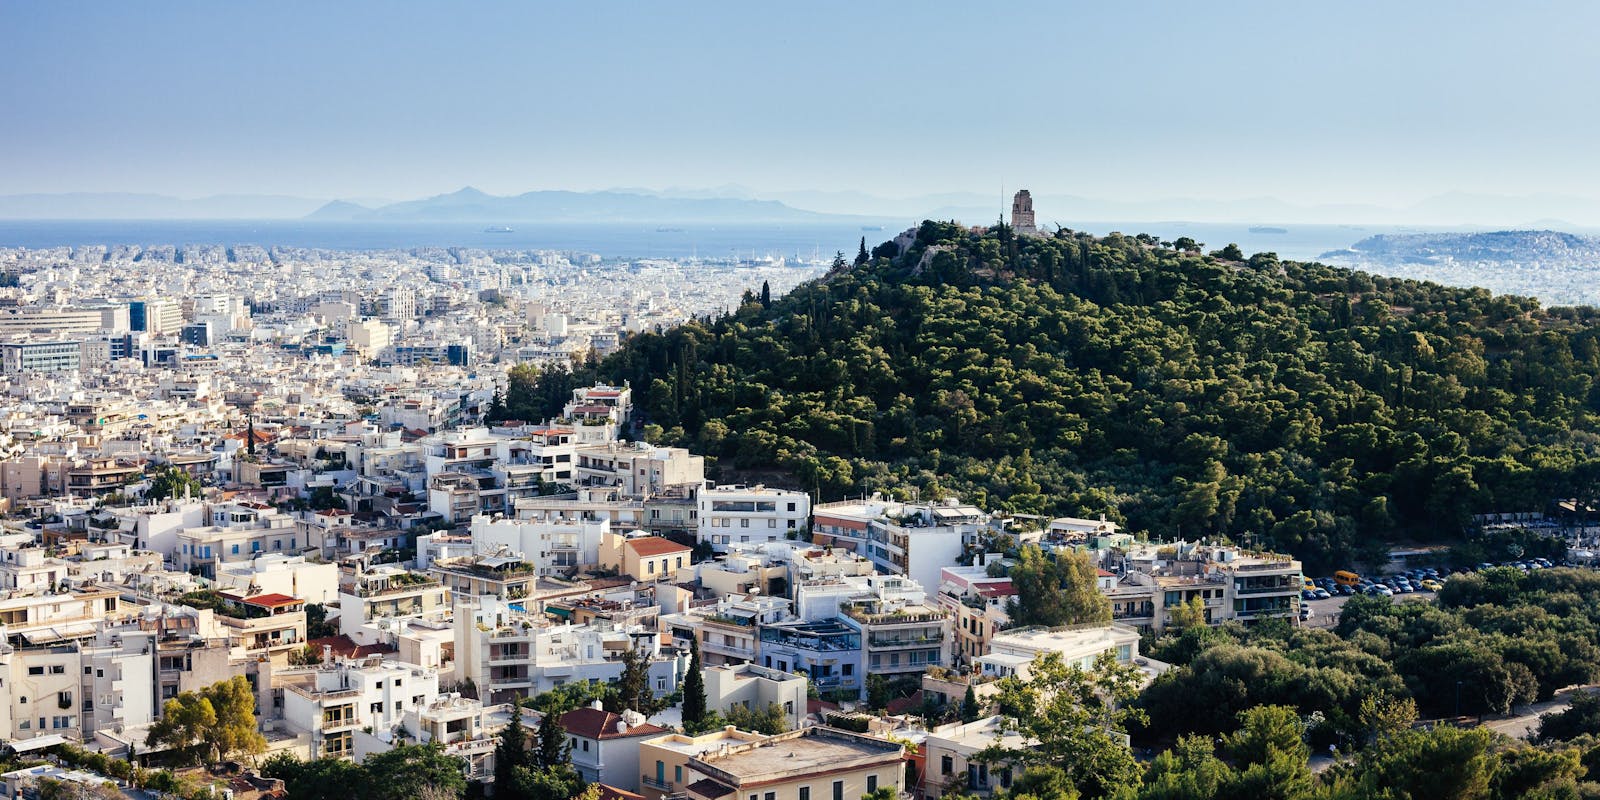 Athen | griechenland.de